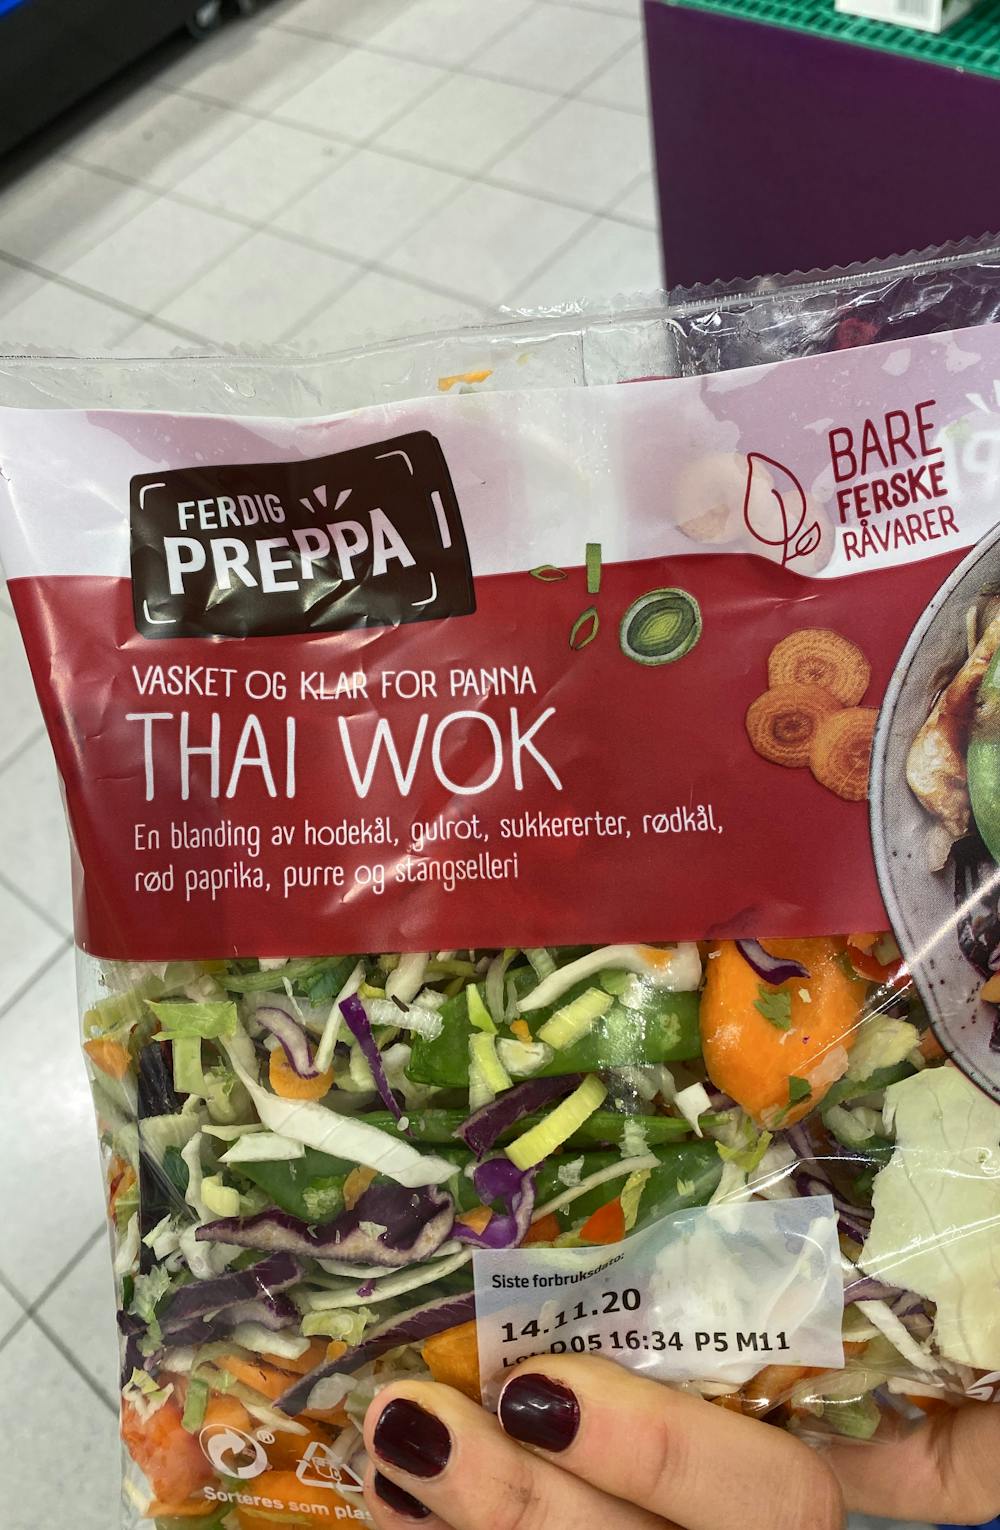 Thai wok, Ferdig preppa